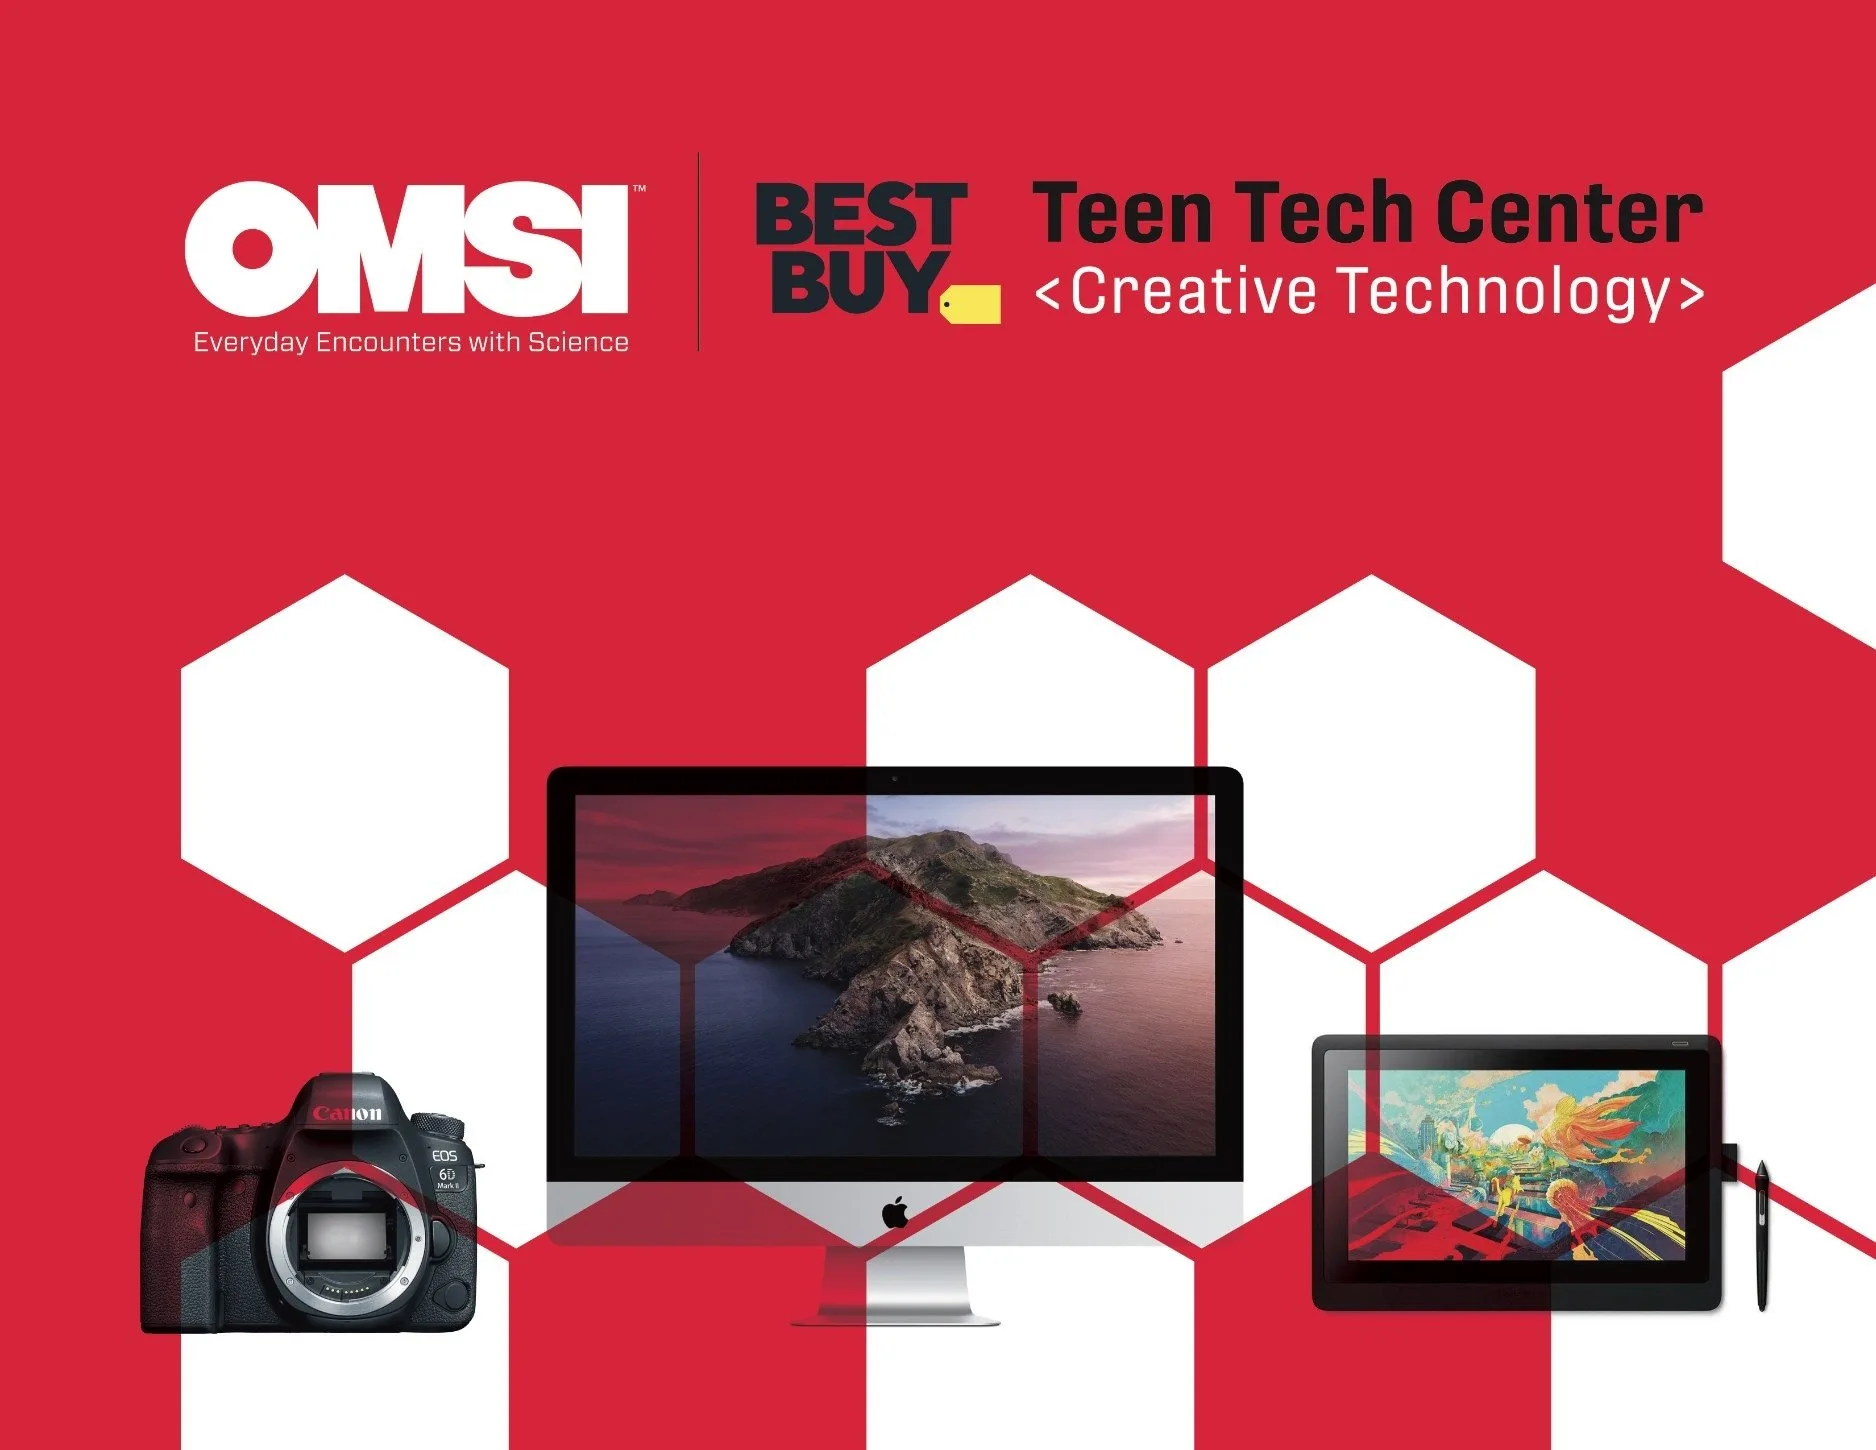 omsi best buy teen tech center creative technology inventory p01